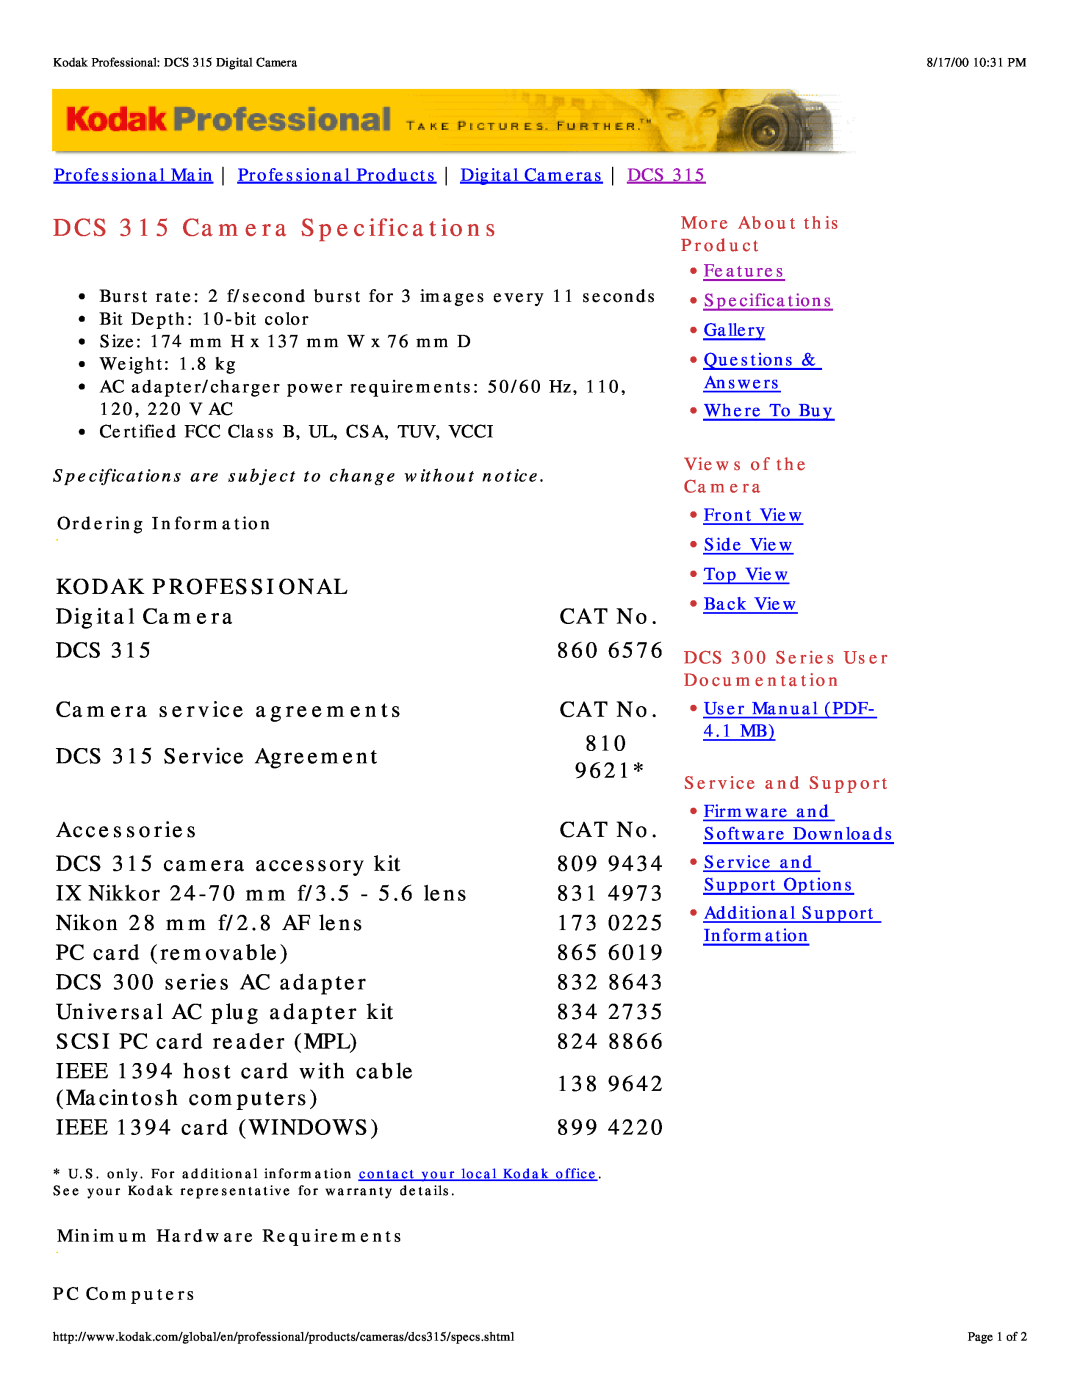 Kodak specifications DCS 315 Camera Specifications, Kodak Professional, Digital Camera, CAT No, Accessories 